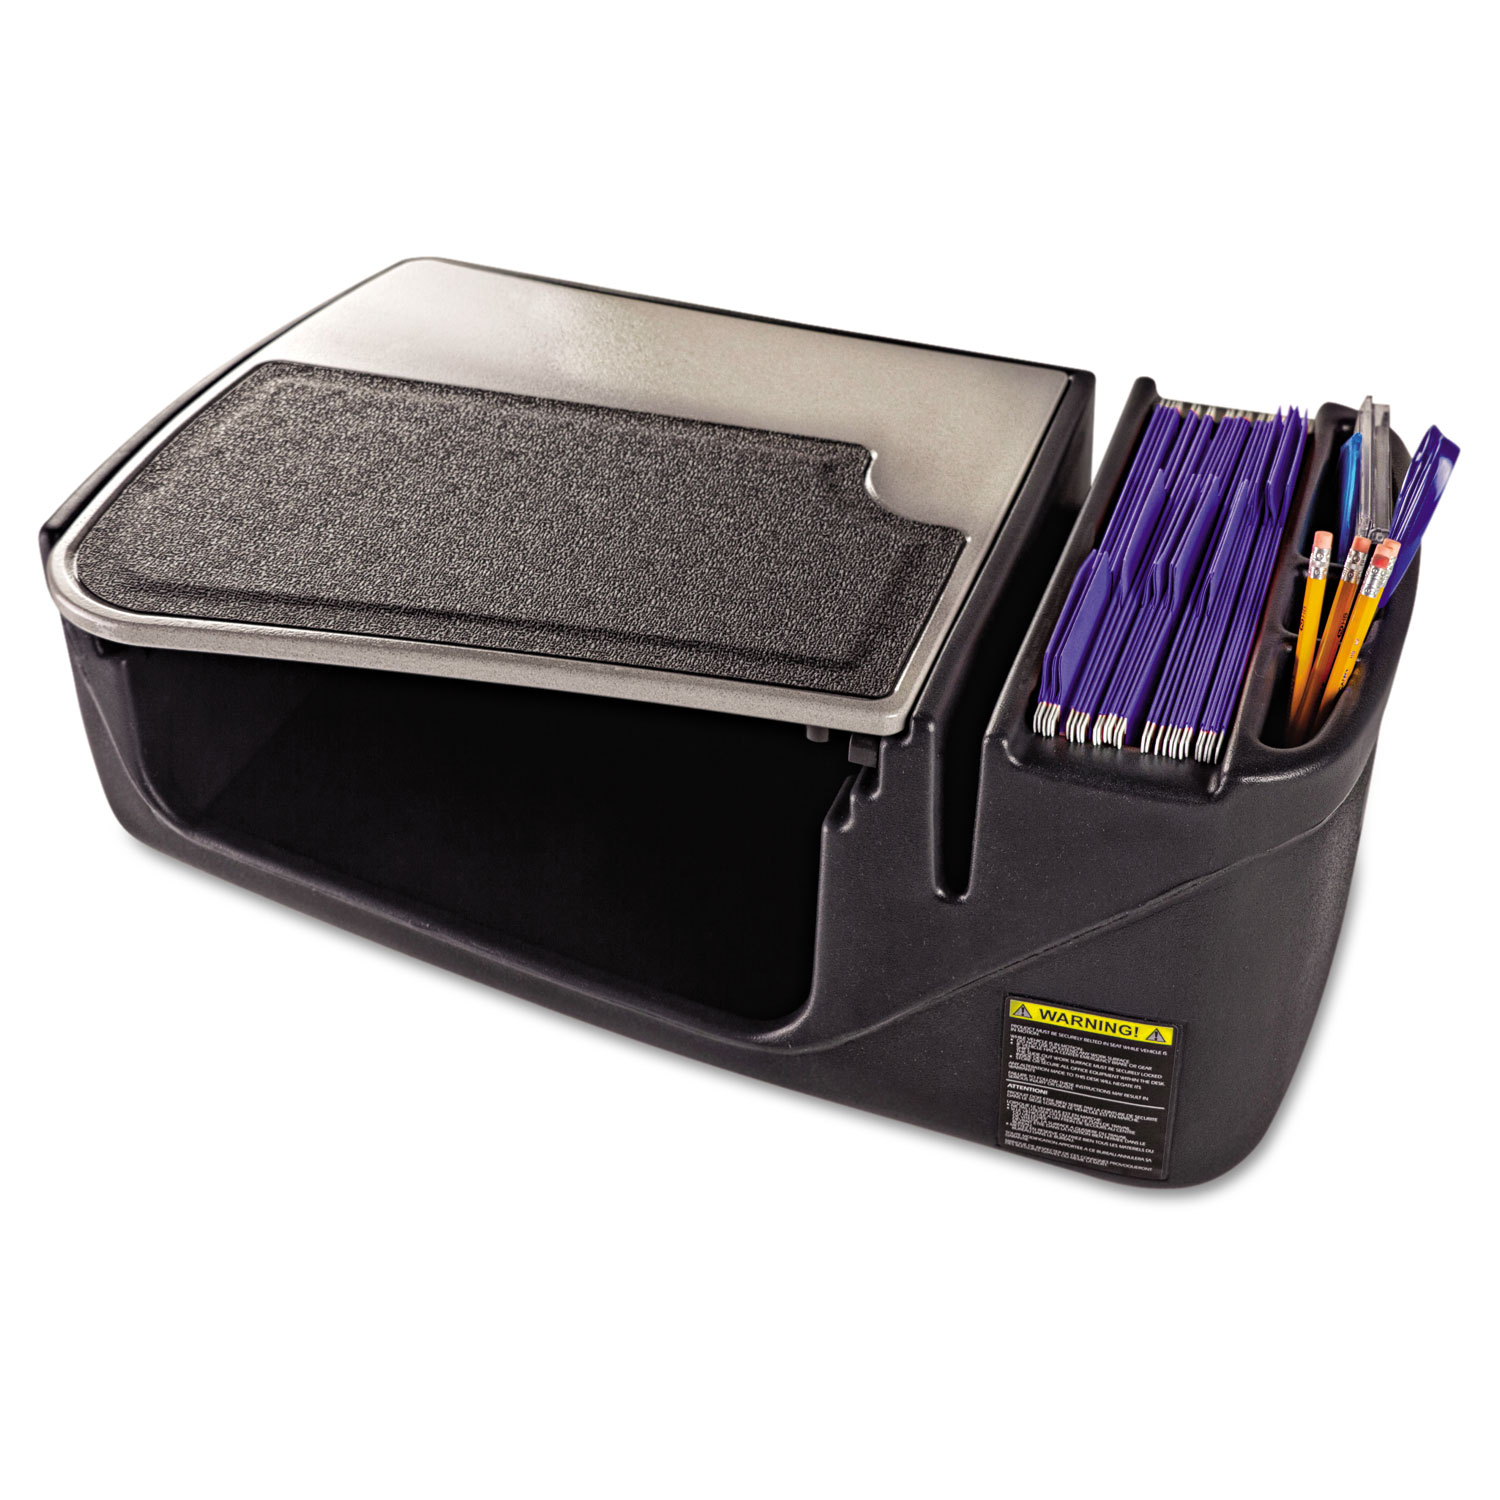 GripMaster 02 Efficiency Auto Desk w/ Writing Surface & Supply Organizer, Gray